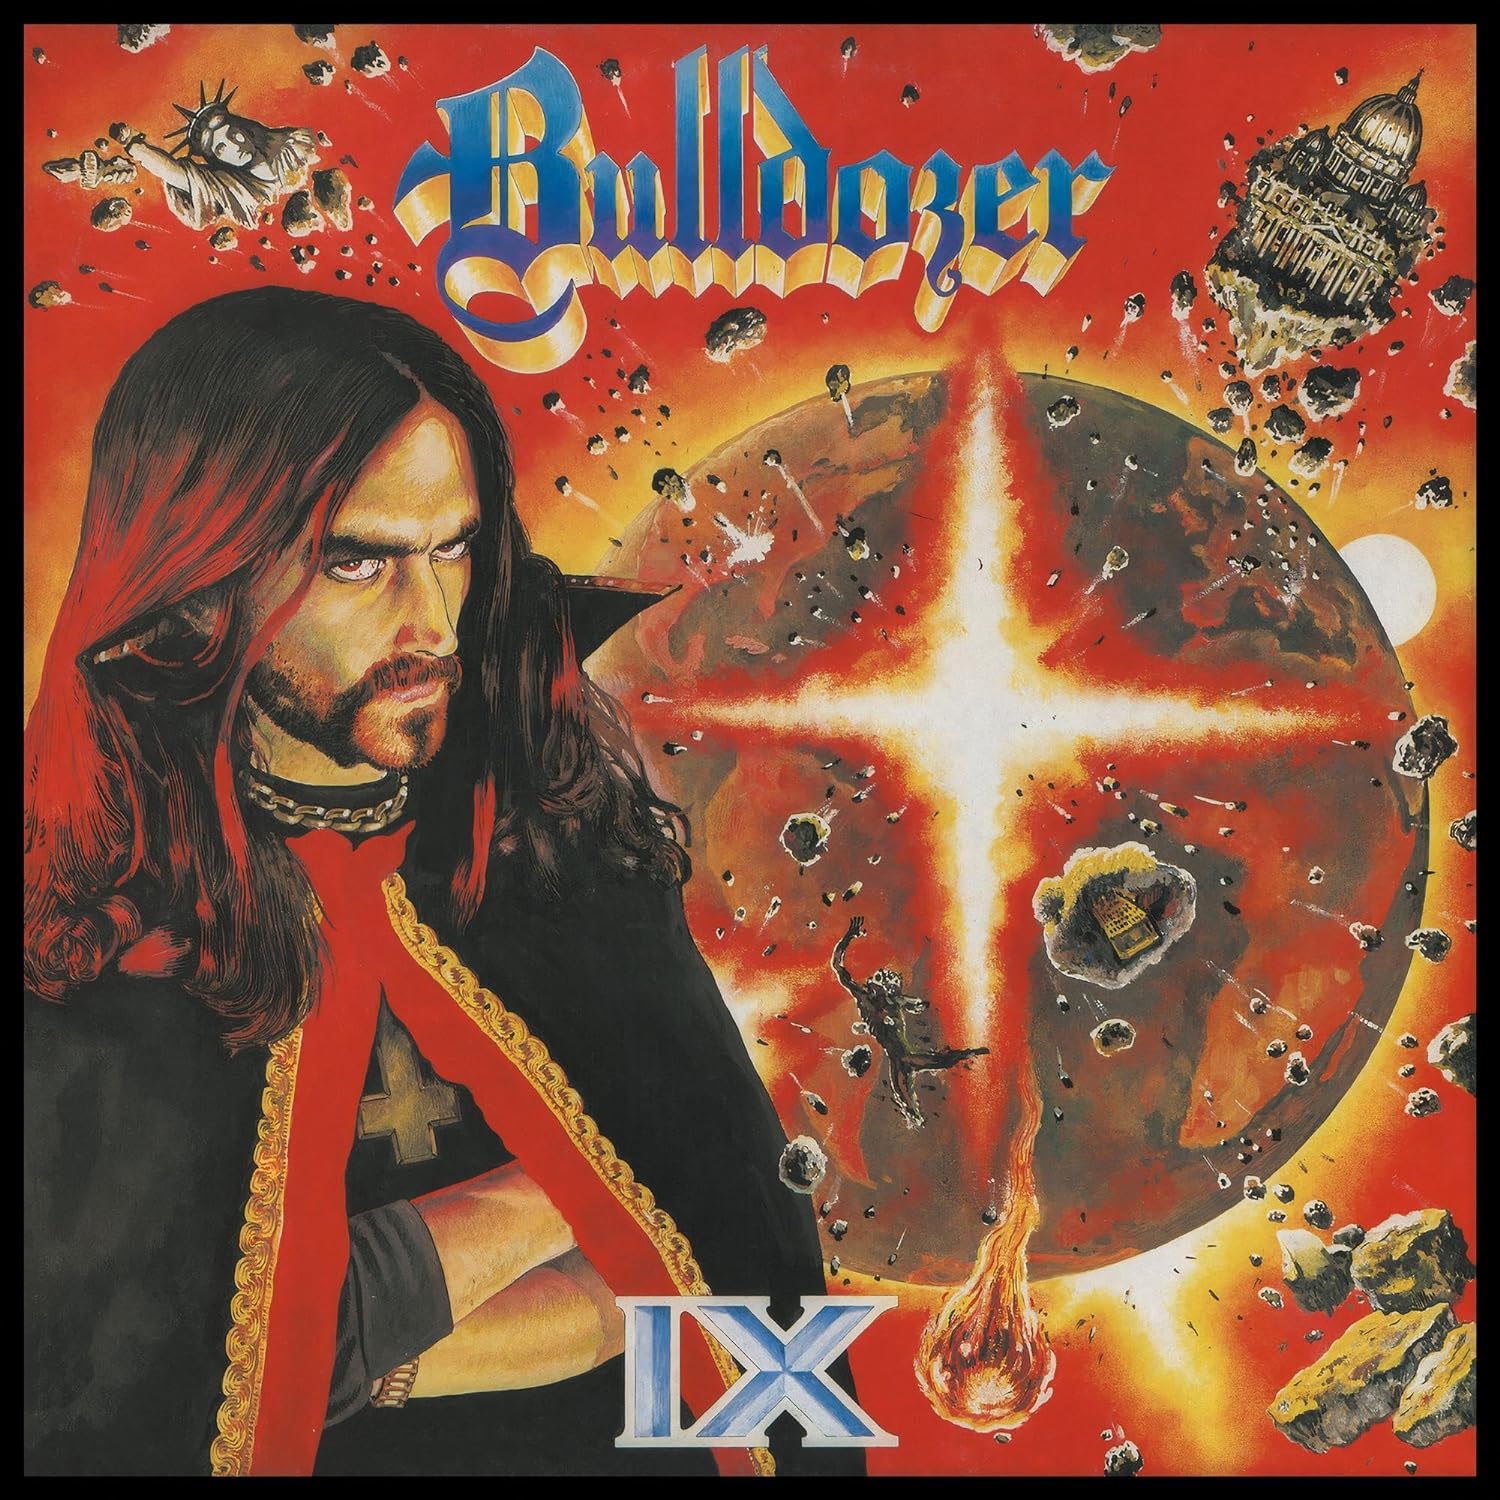 BULLDOZER "IX" Vinyl - PRE-ORDER